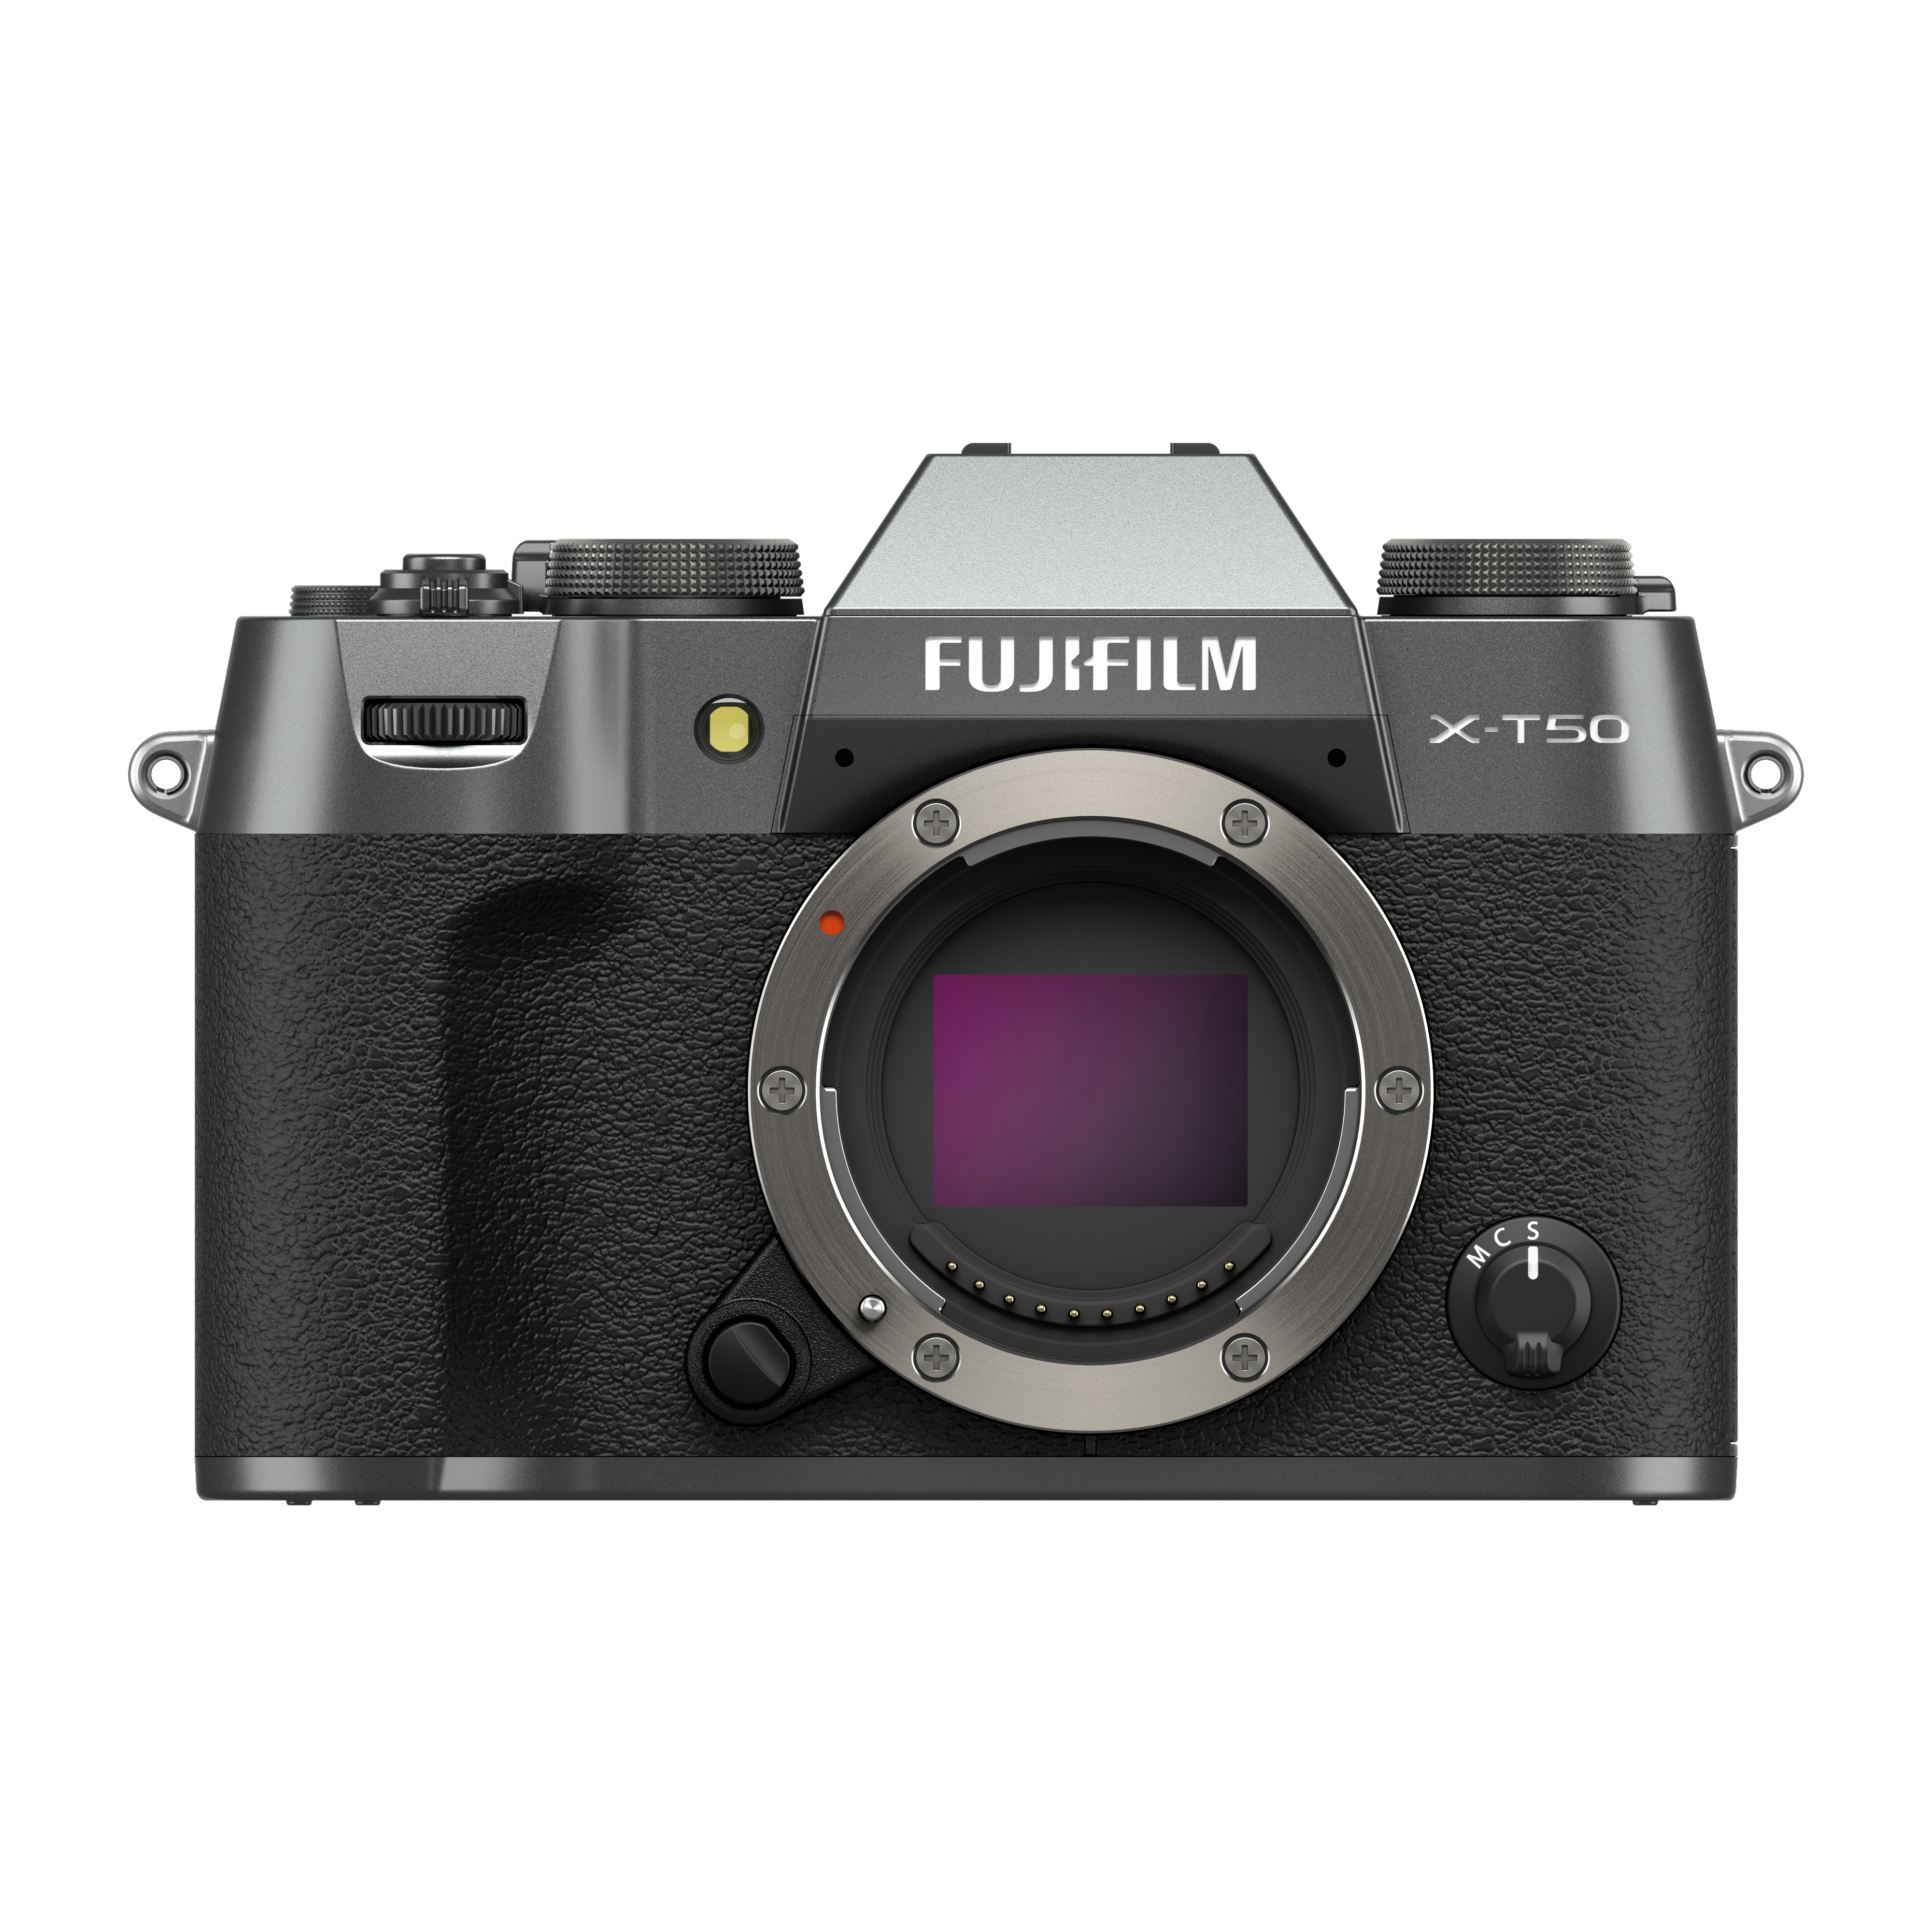 Fujifilm X-T50 Mirrorless Camera (Charcoal Silver)